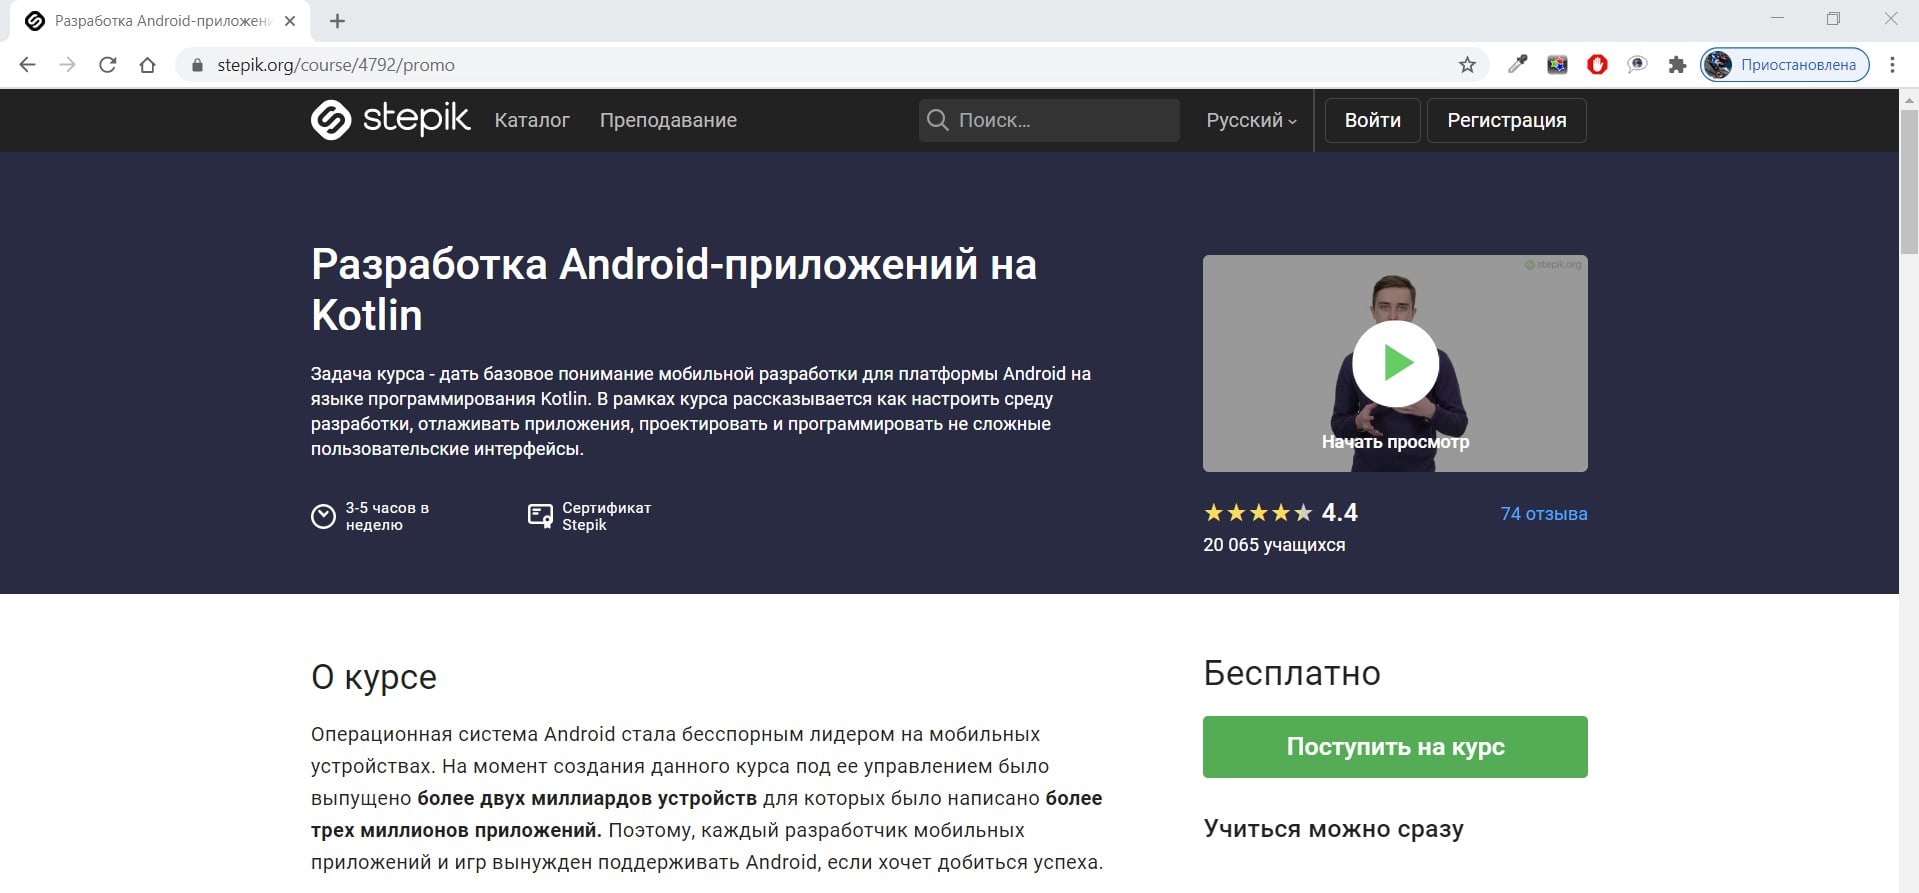 Android приложение на kotlin. Разработка Android-приложений на Kotlin на stepik. Kotlin обучение. Приложения на Kotlin.